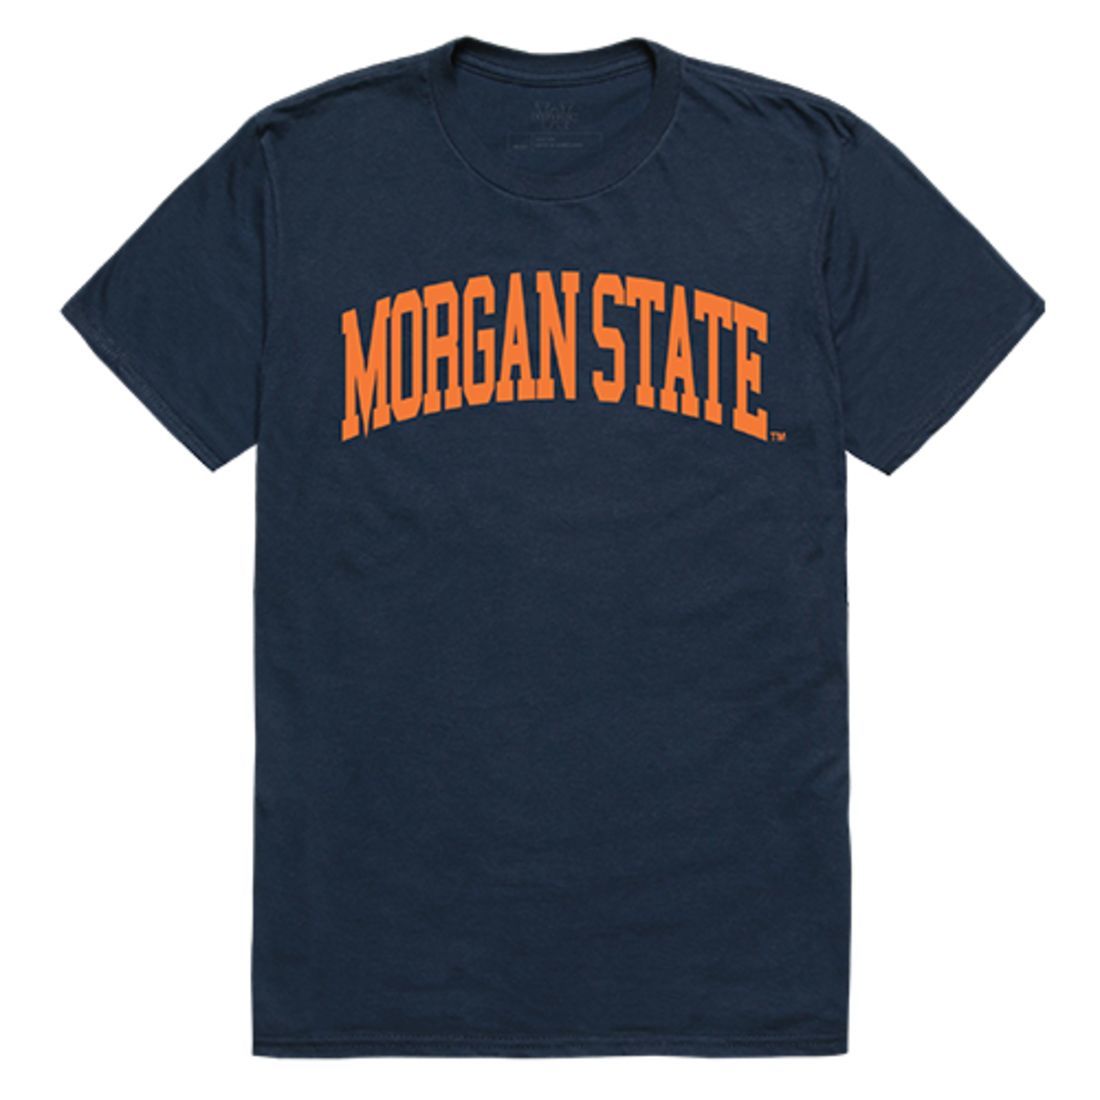 MSU Morgan State University Bears College T-Shirt Navy-Campus-Wardrobe